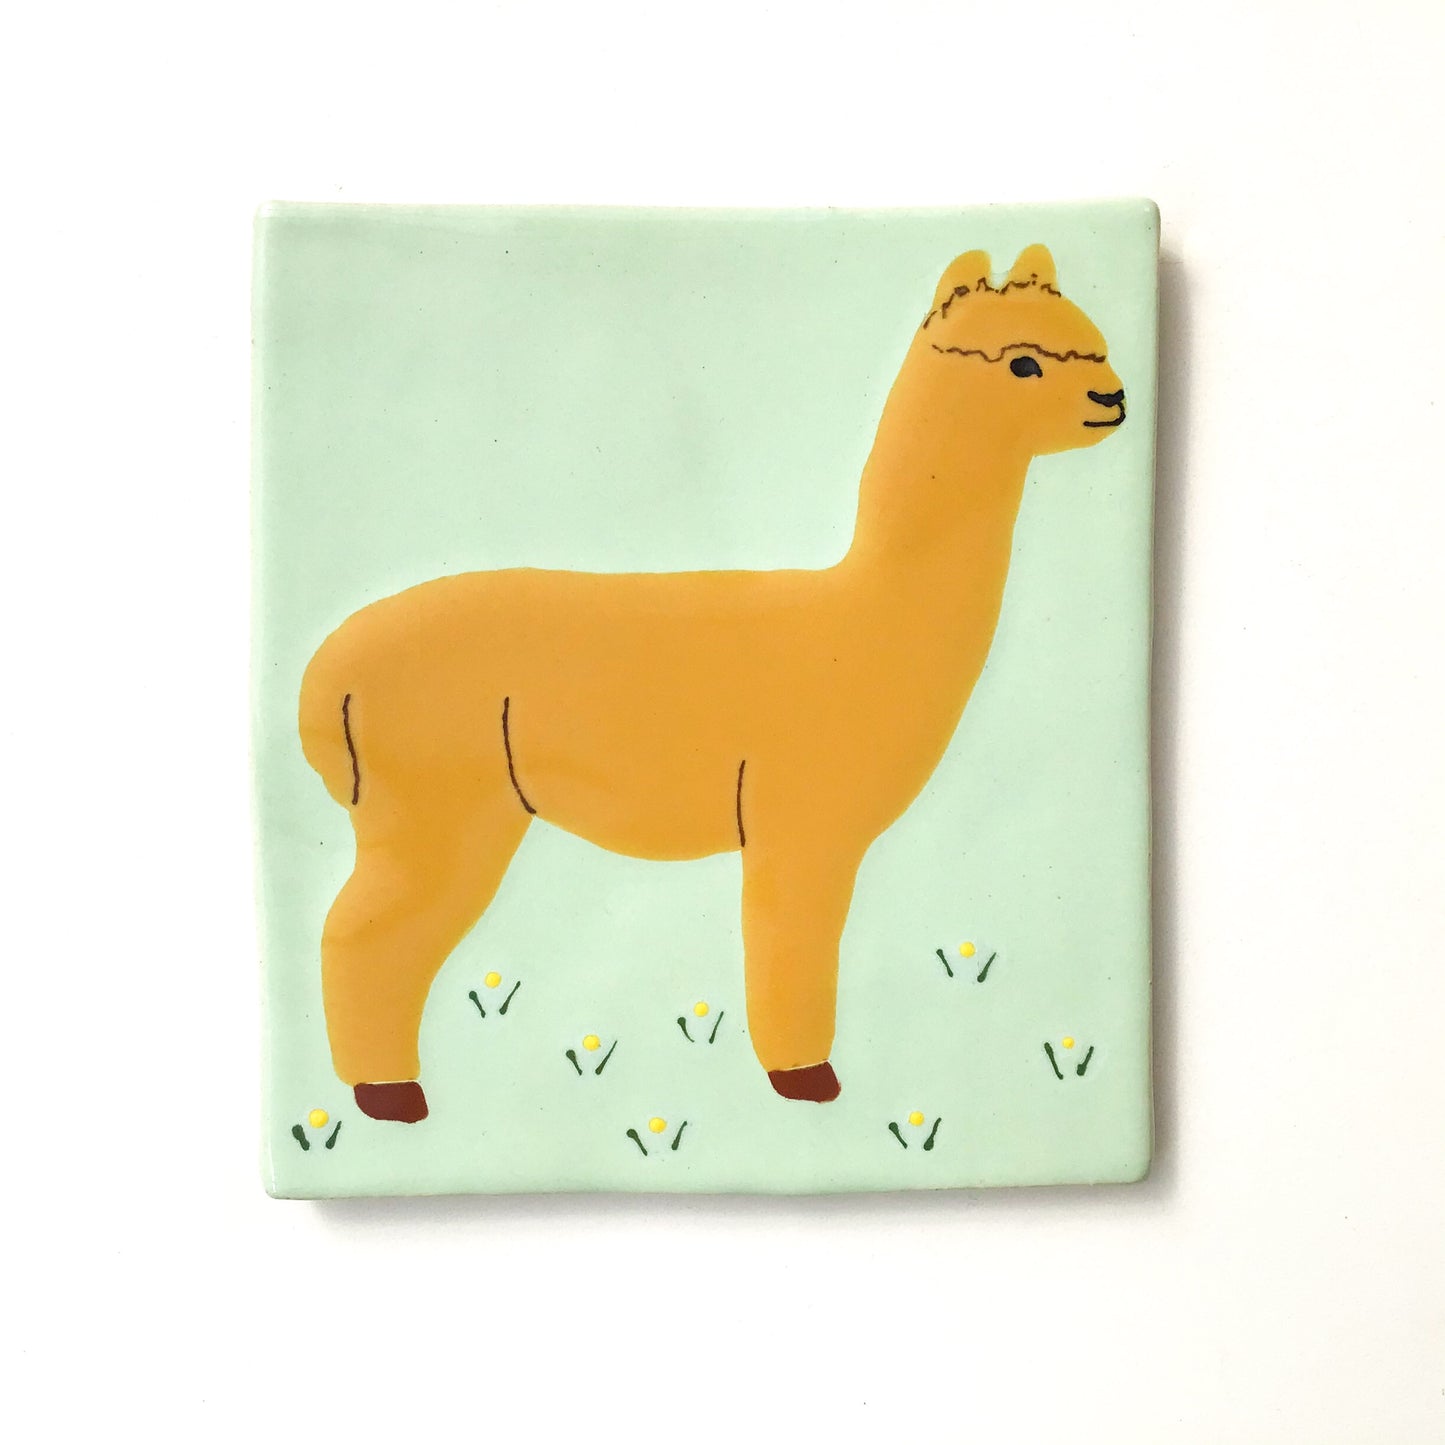 Alpaca Coasters / Alpaca Trivets - Ceramic Farmhouse Kitchen Decor